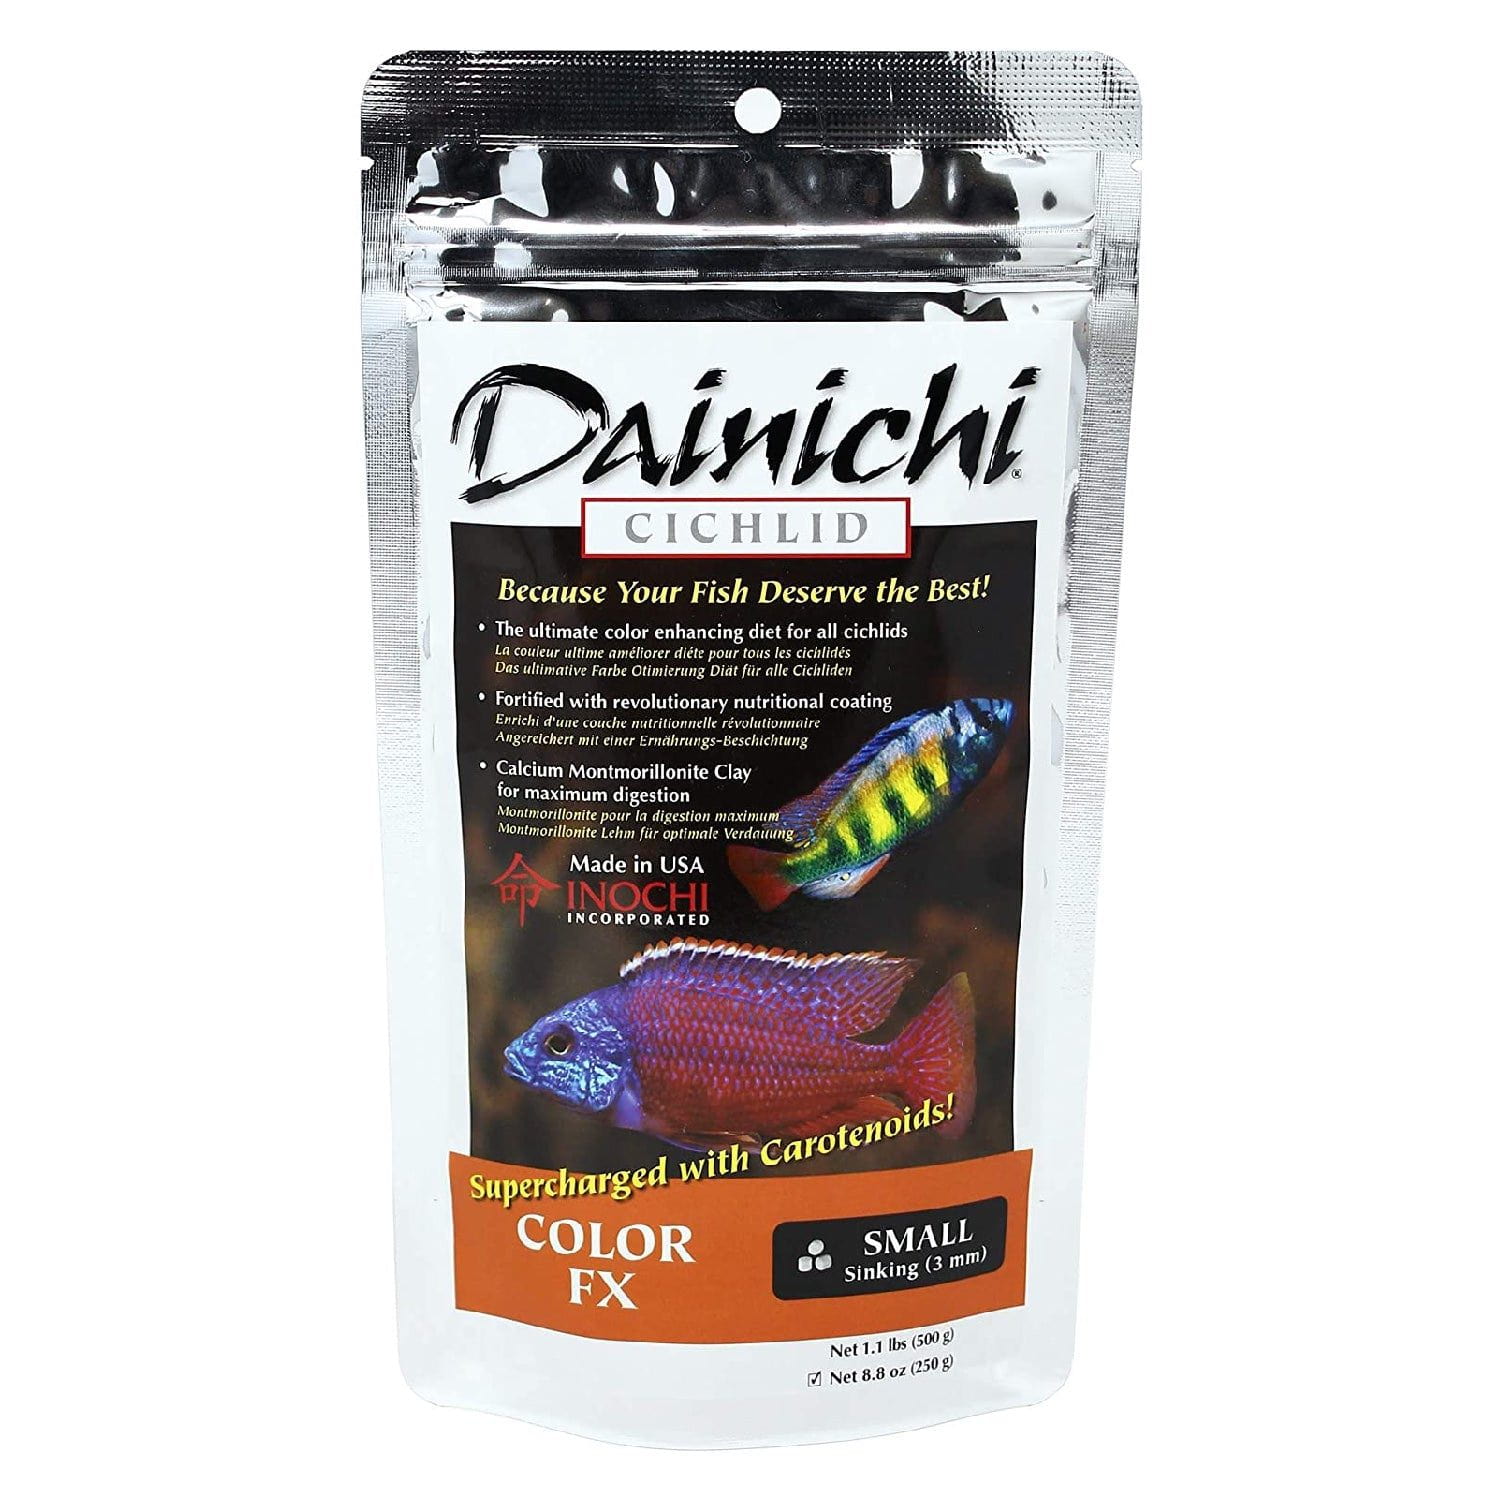 Dainichi | Cichlid Color FX (Sinking) Small (3mm) / 8.8 oz (250g) 713166126124 Super Cichlids